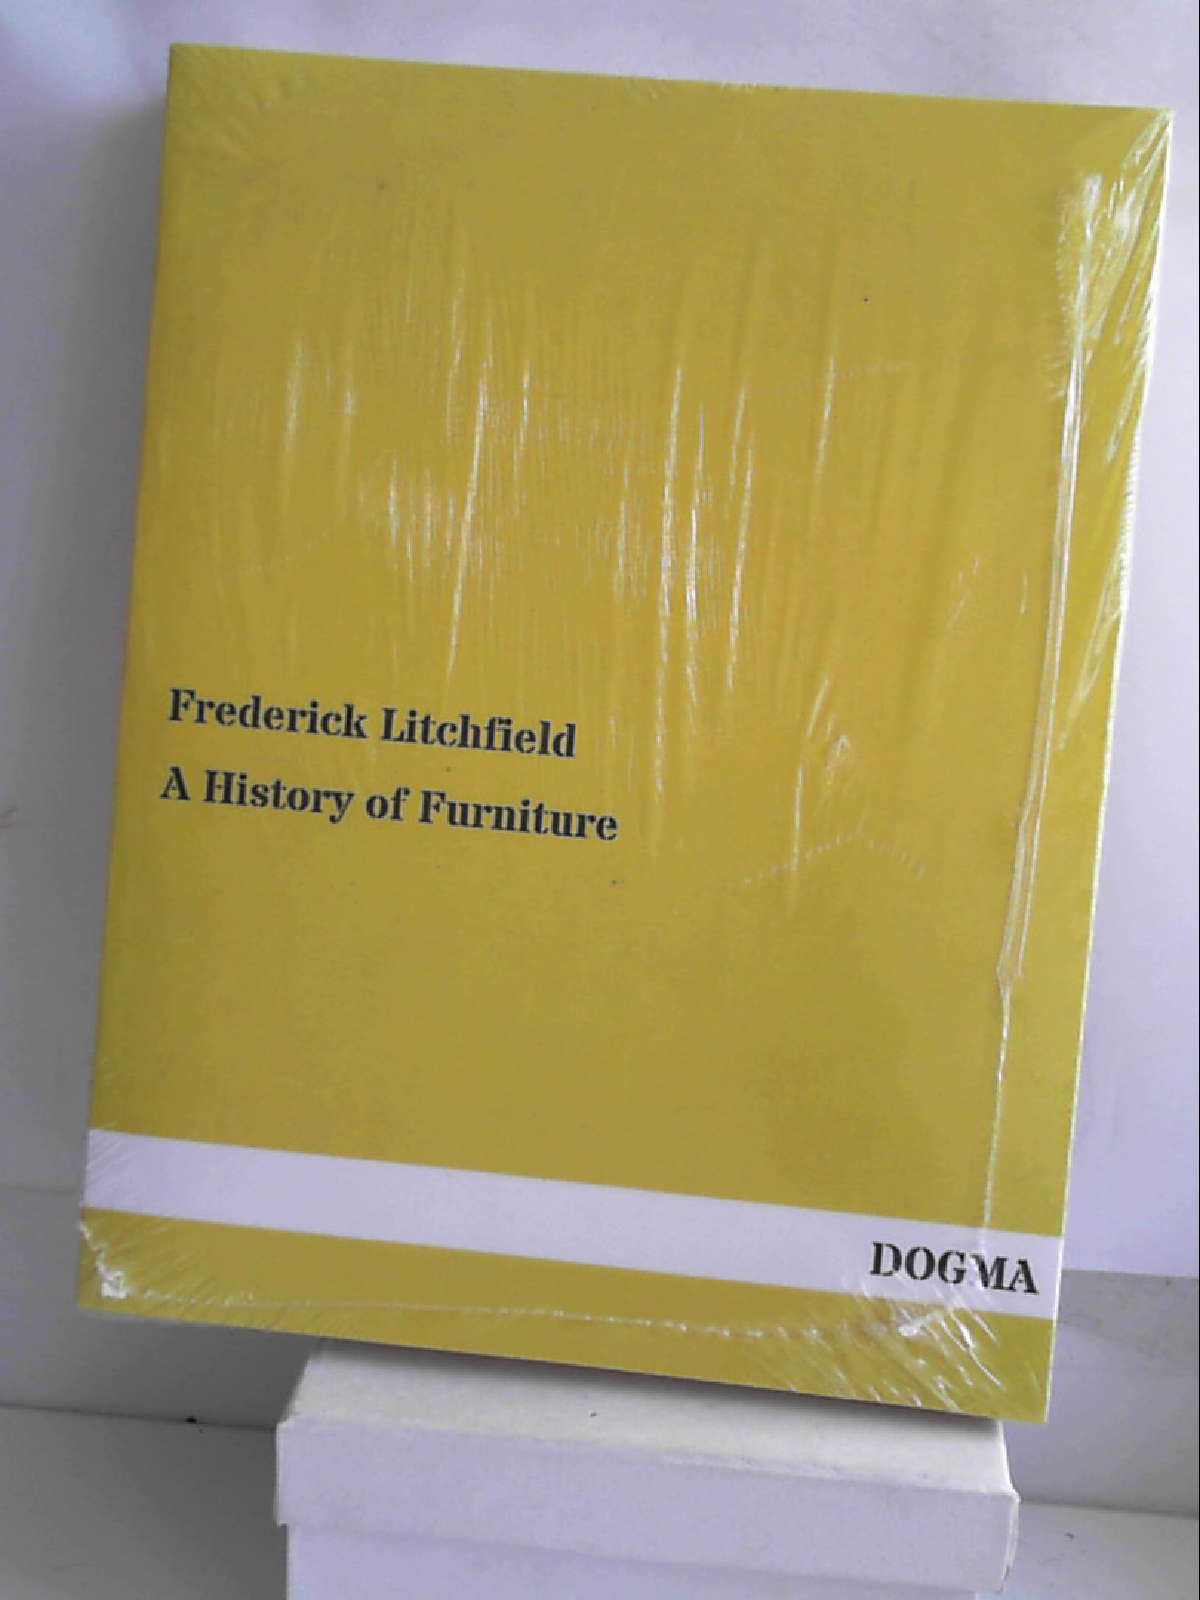 A History of Furniture [Paperback] [Jan 07, 2014] Litchfield, Frederick - Frederick Litchfield